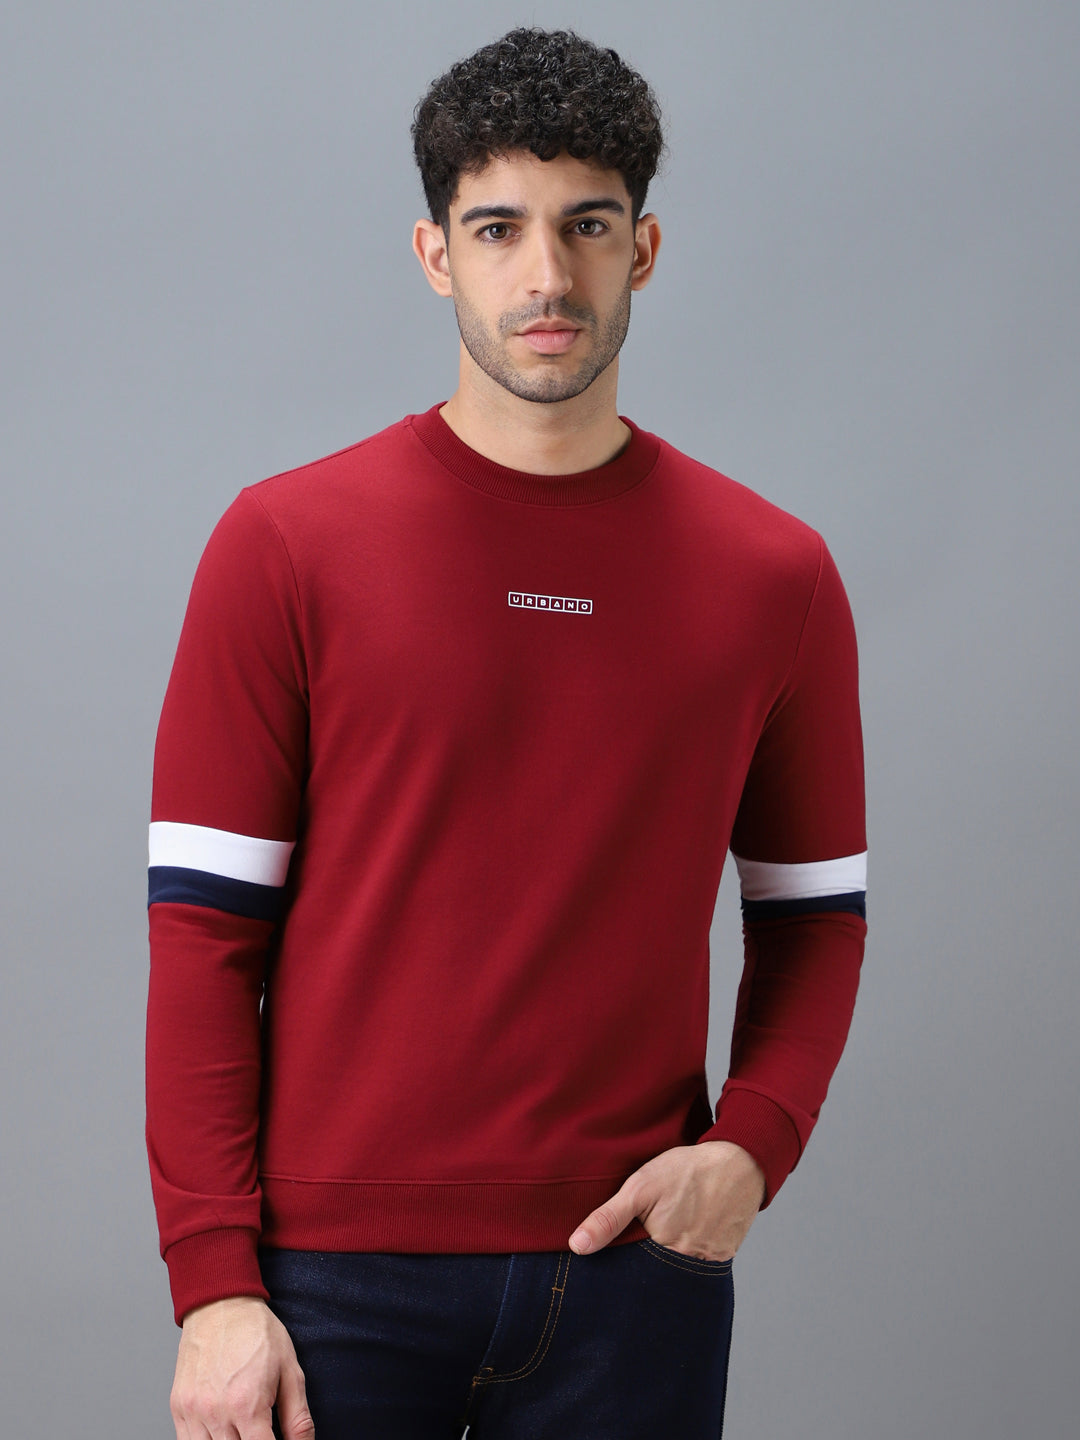 Men's Red Cotton Color Block Round Neck Sweatshirt